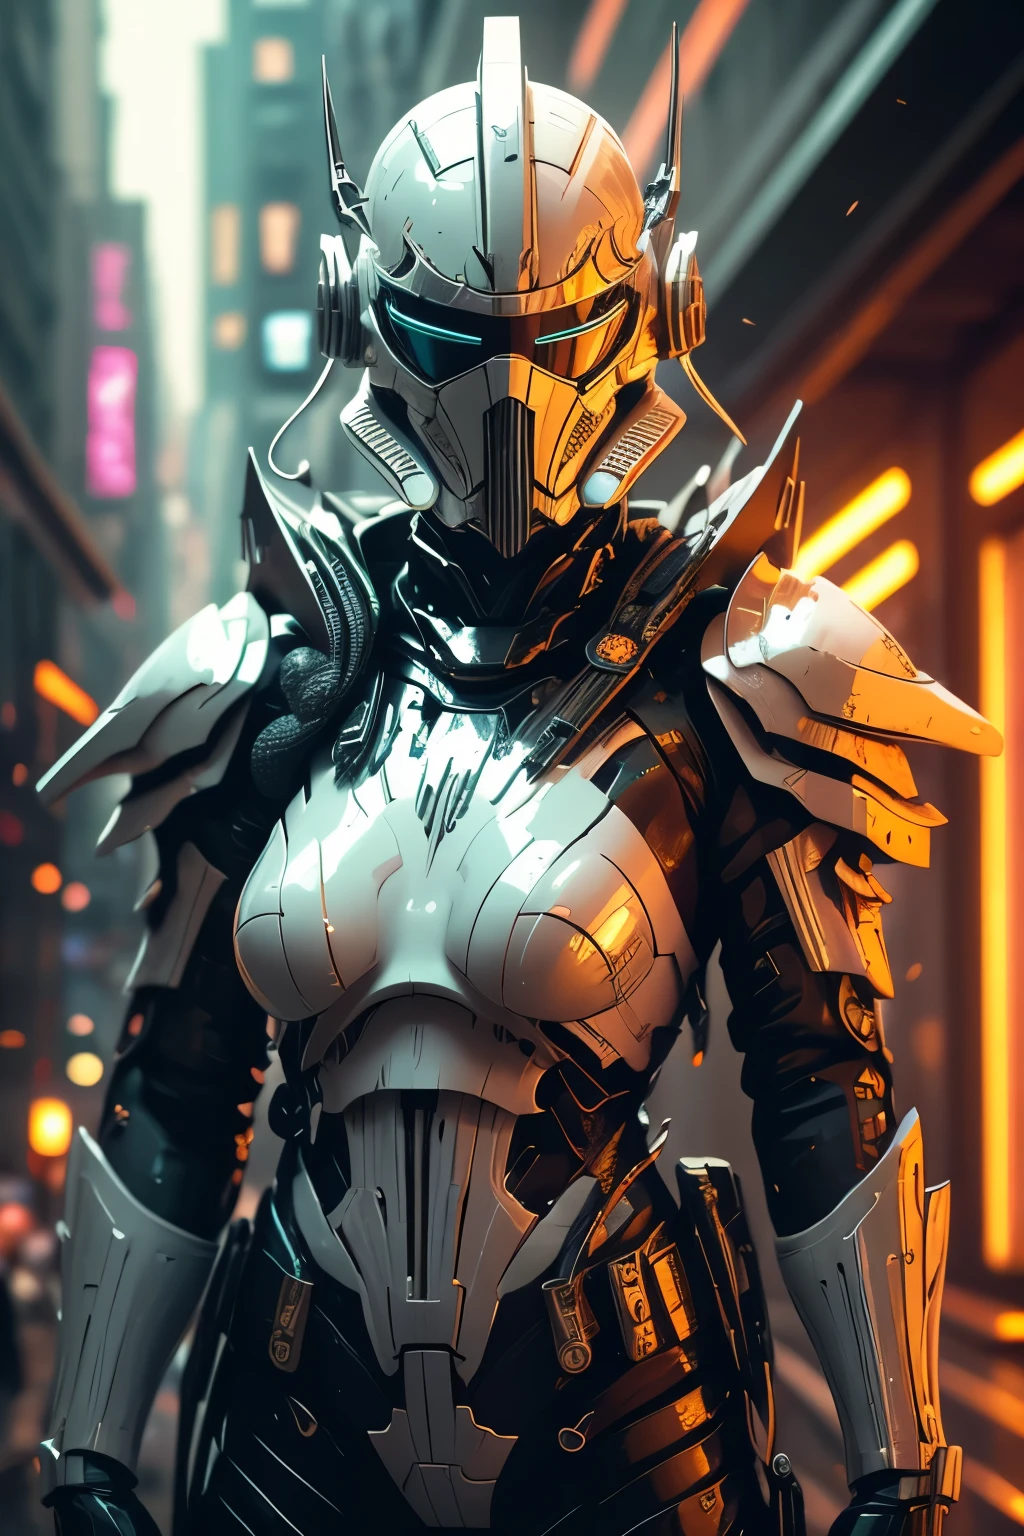 Sprite cyberpunk estilo SH4G0D, Mujer femenina Stormtrooper cósmica